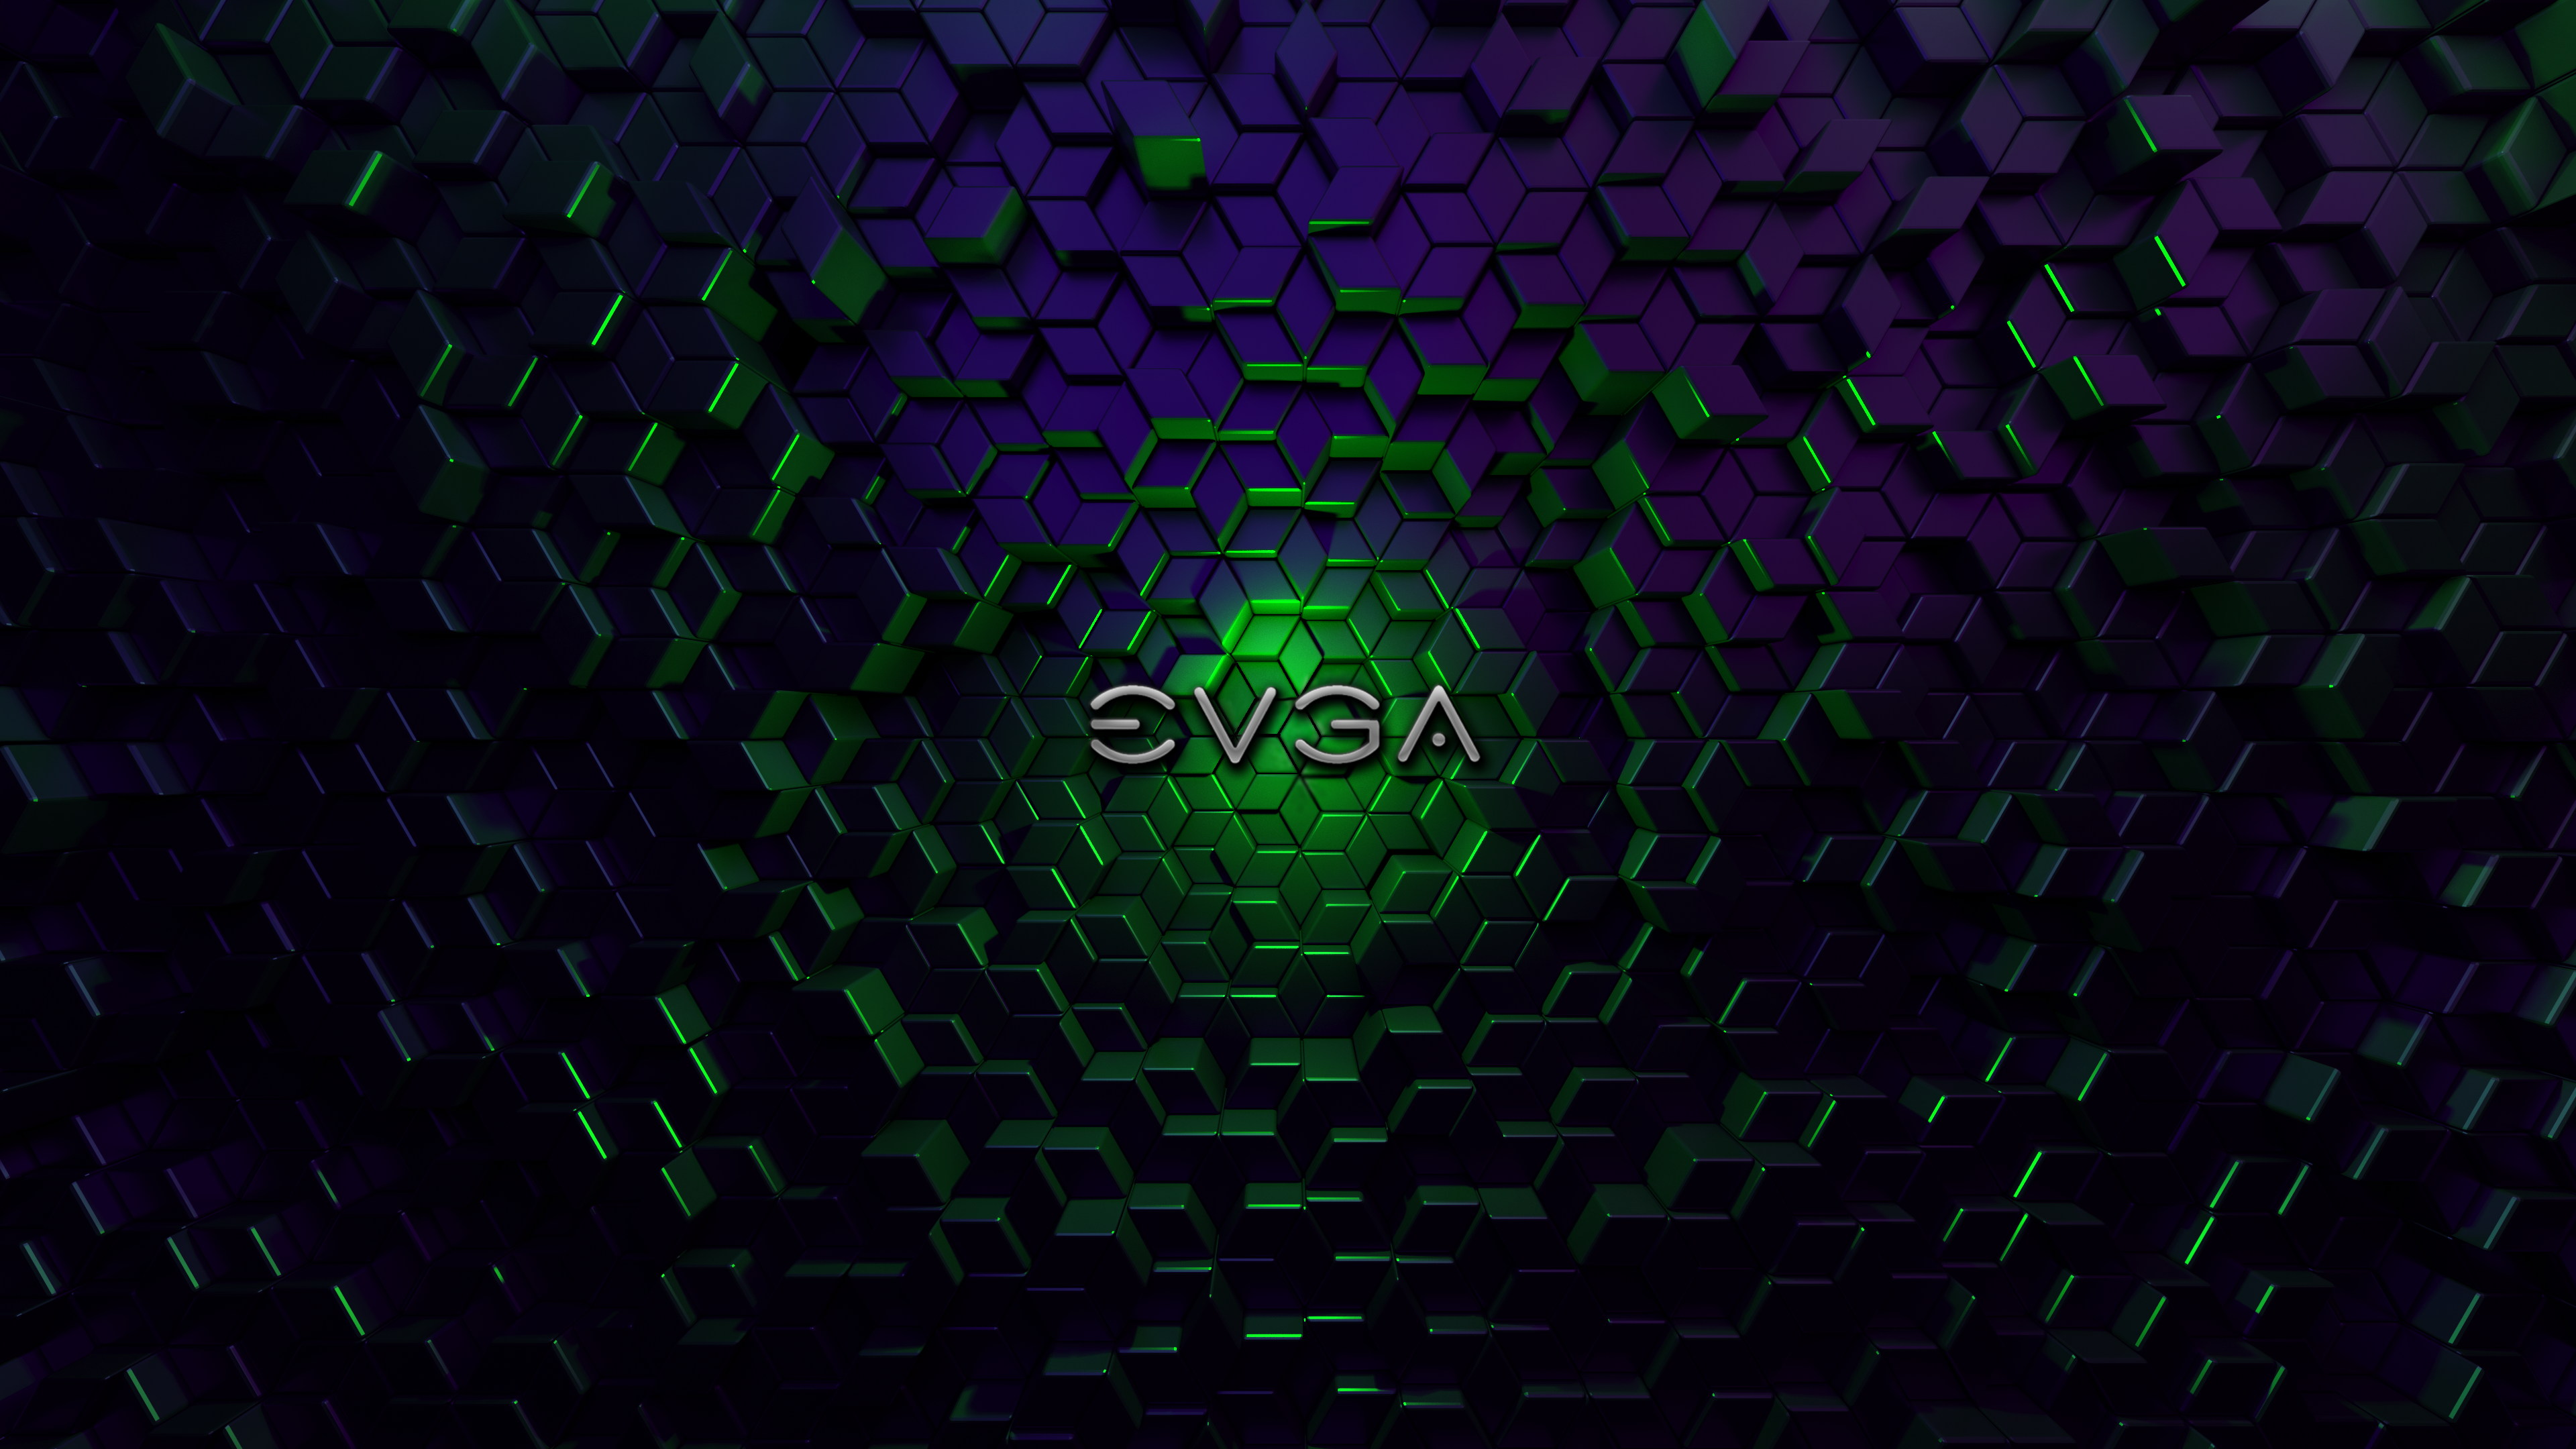 Evga Computer Vortex Wallpaper Resolution 3840x2160 Id Wallha Com